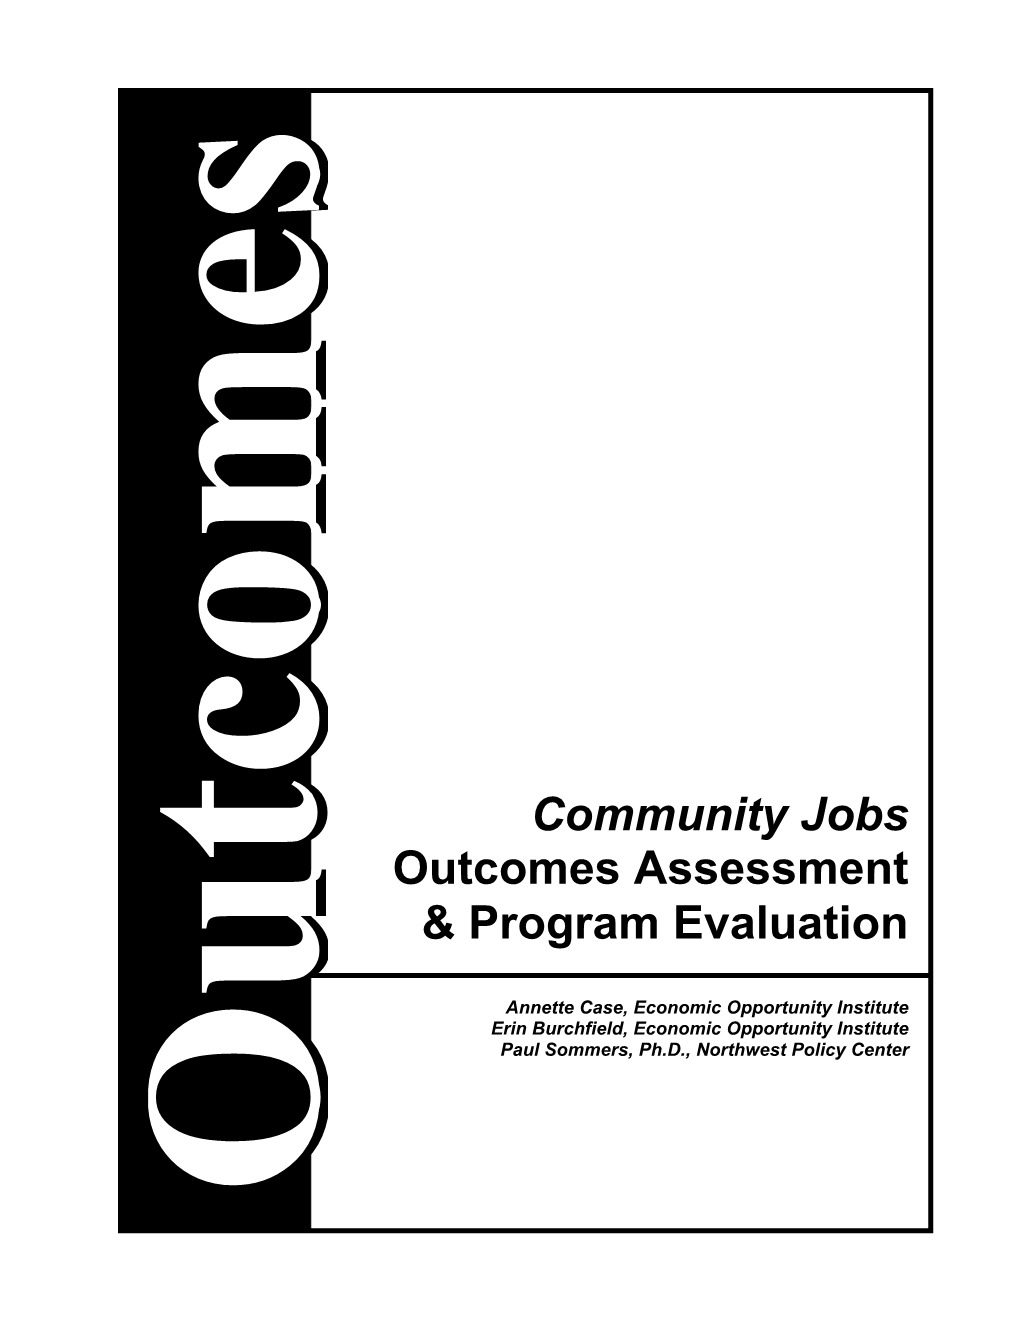 Community Jobs Outcomes Assessment & Program Evaluation